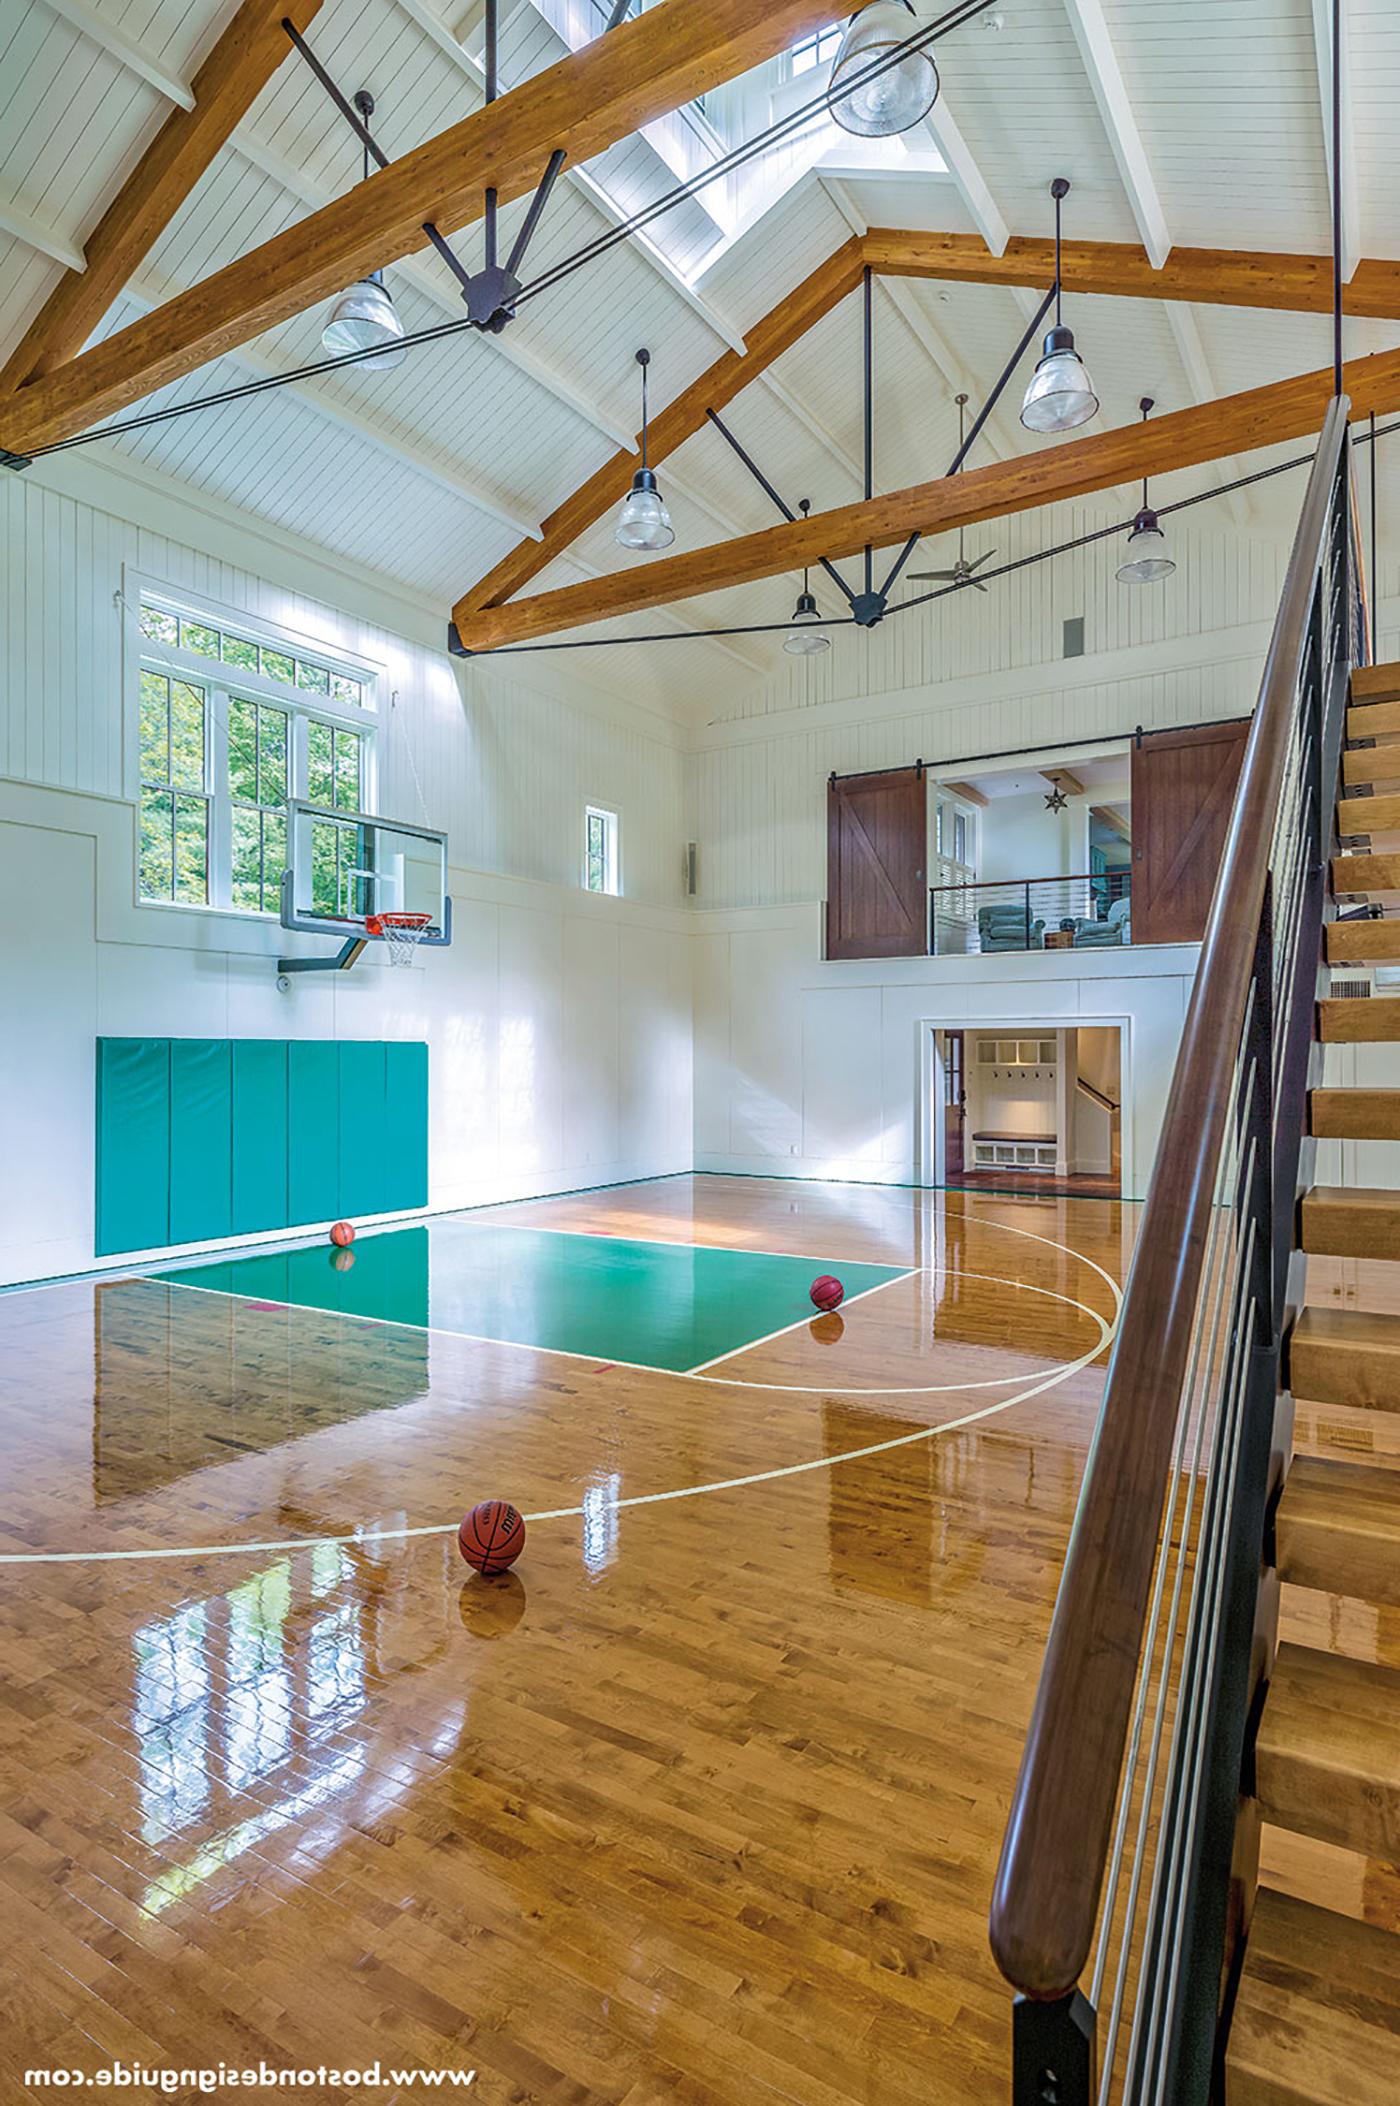 custom basketball court in barn